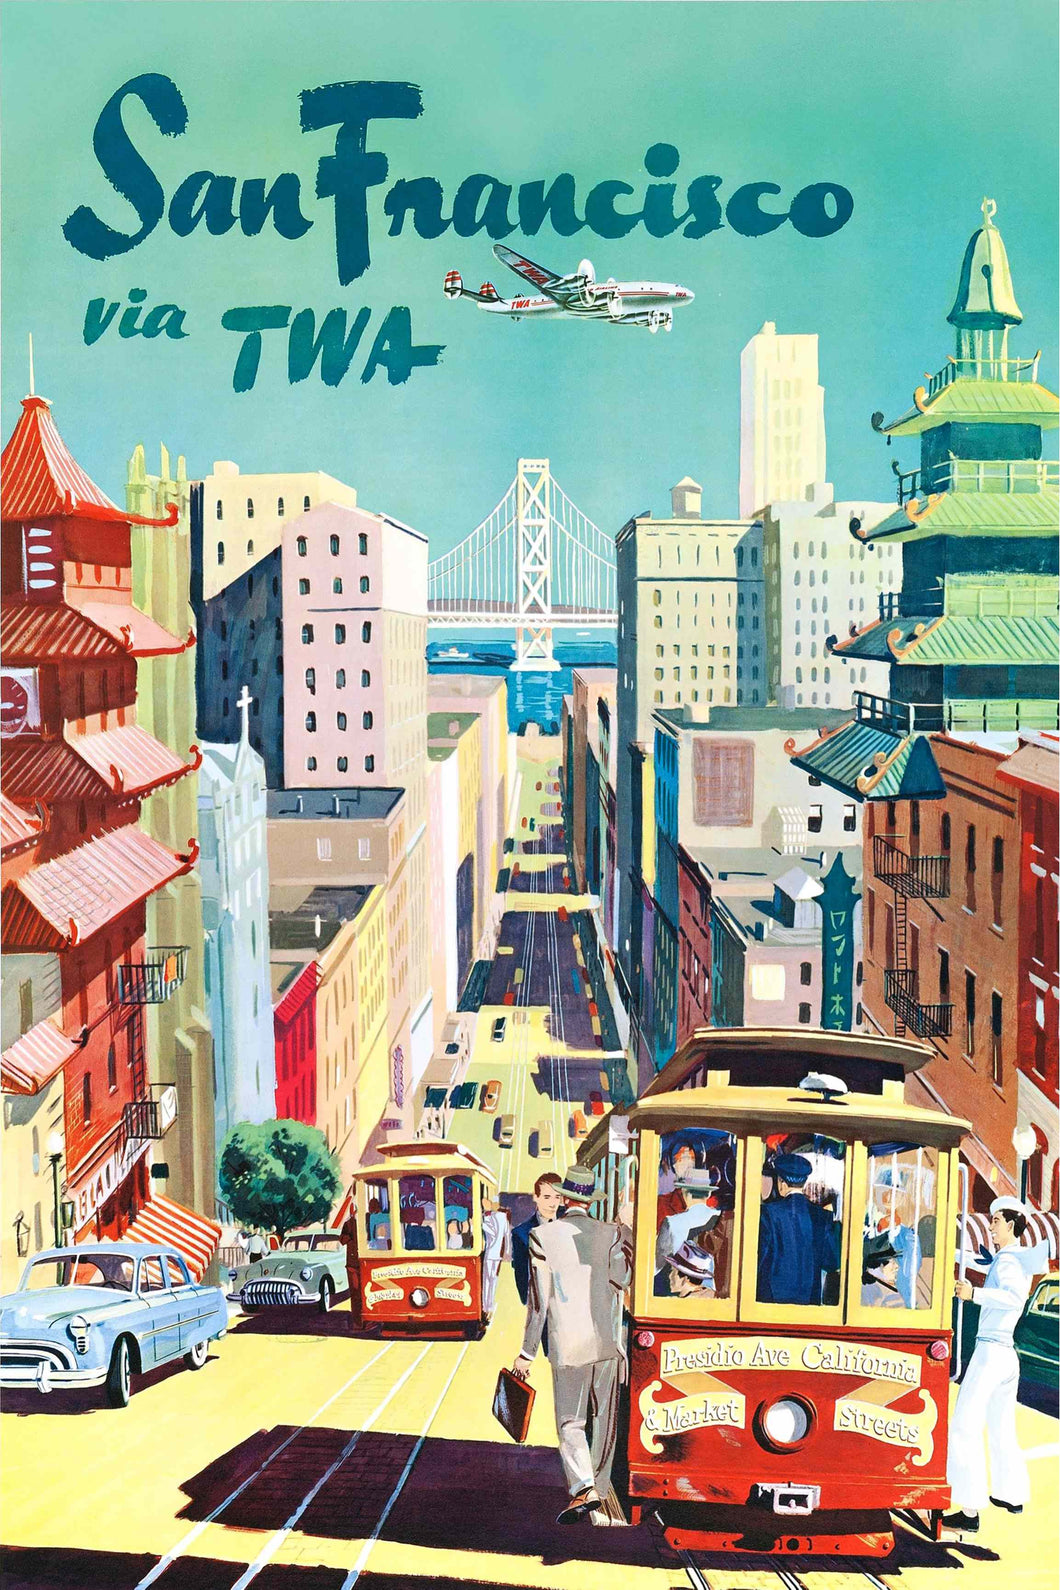 Vintage San Francisco Travel Poster - egoamo.co.za